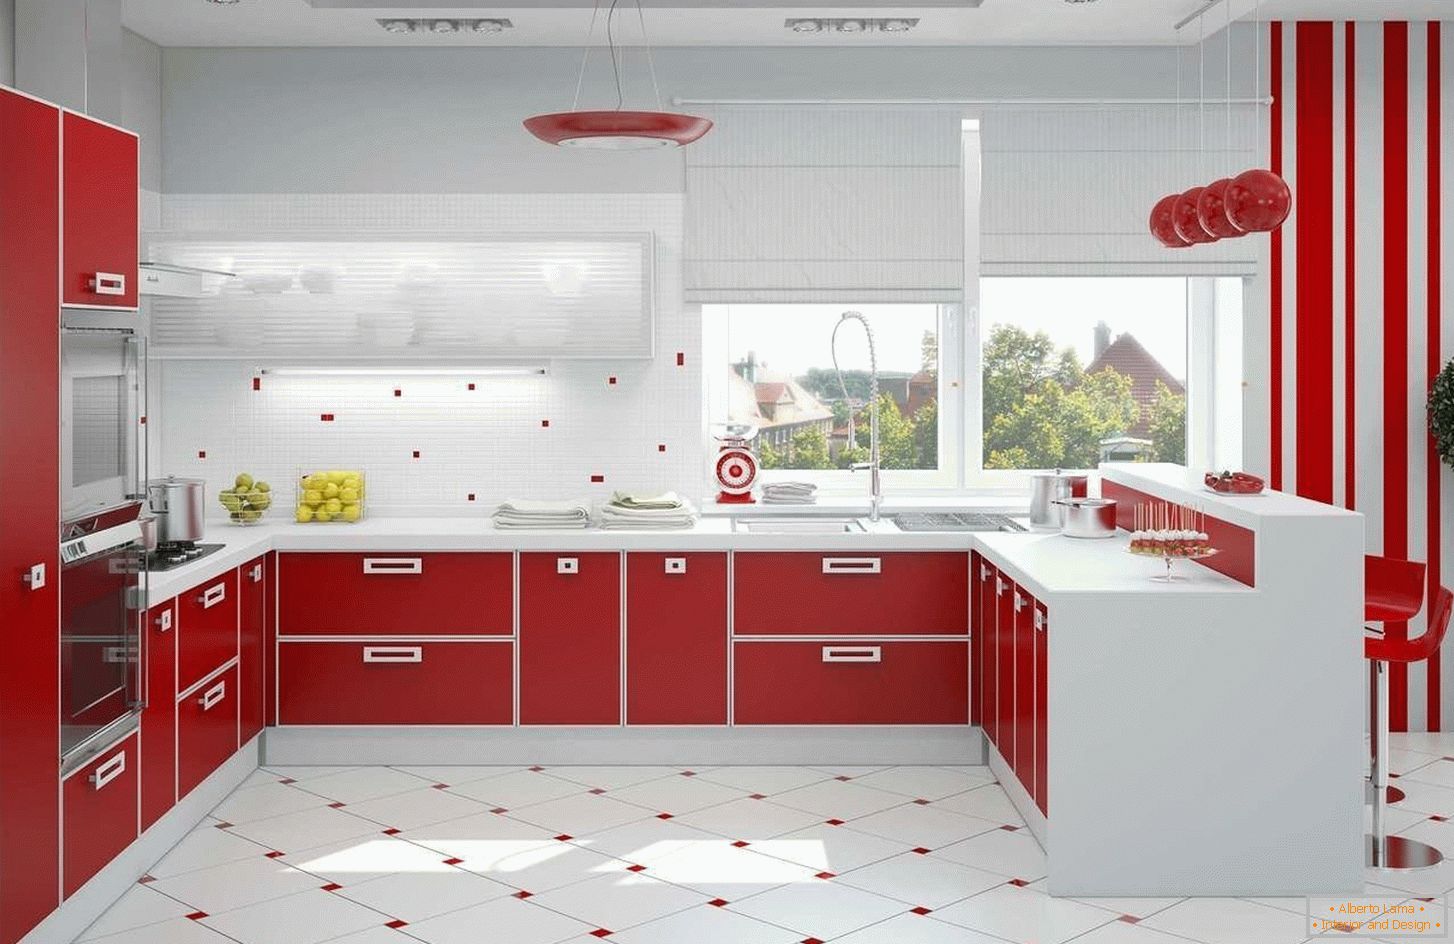 Црвено-бела унутрашња кухиња